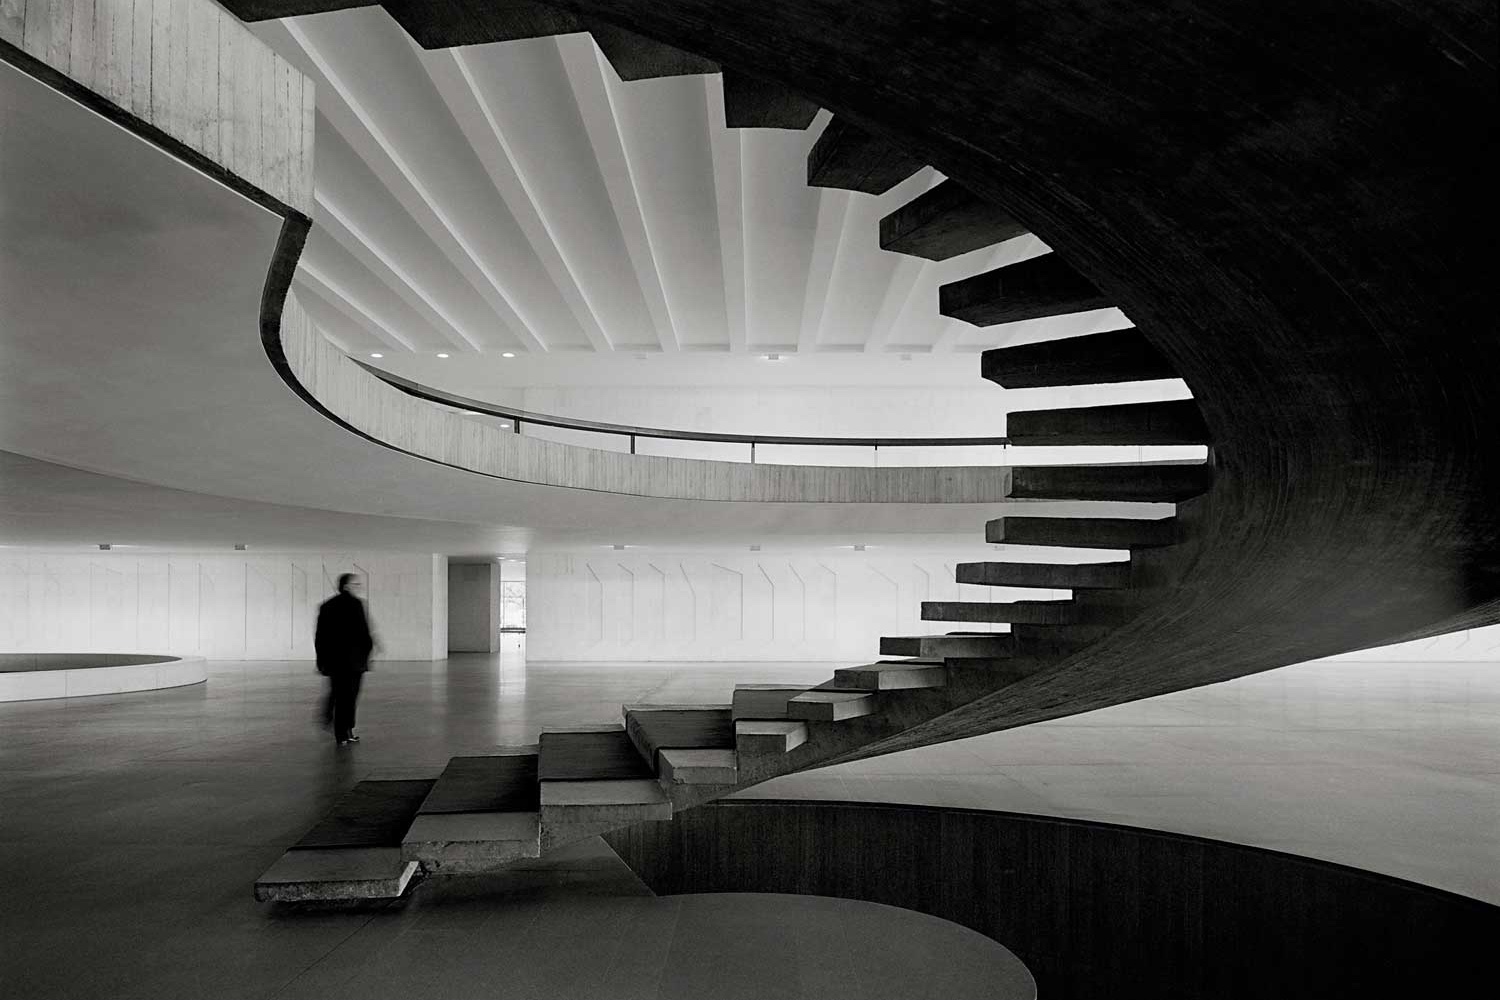 Spiral staircase in the Palácio do Itamaraty